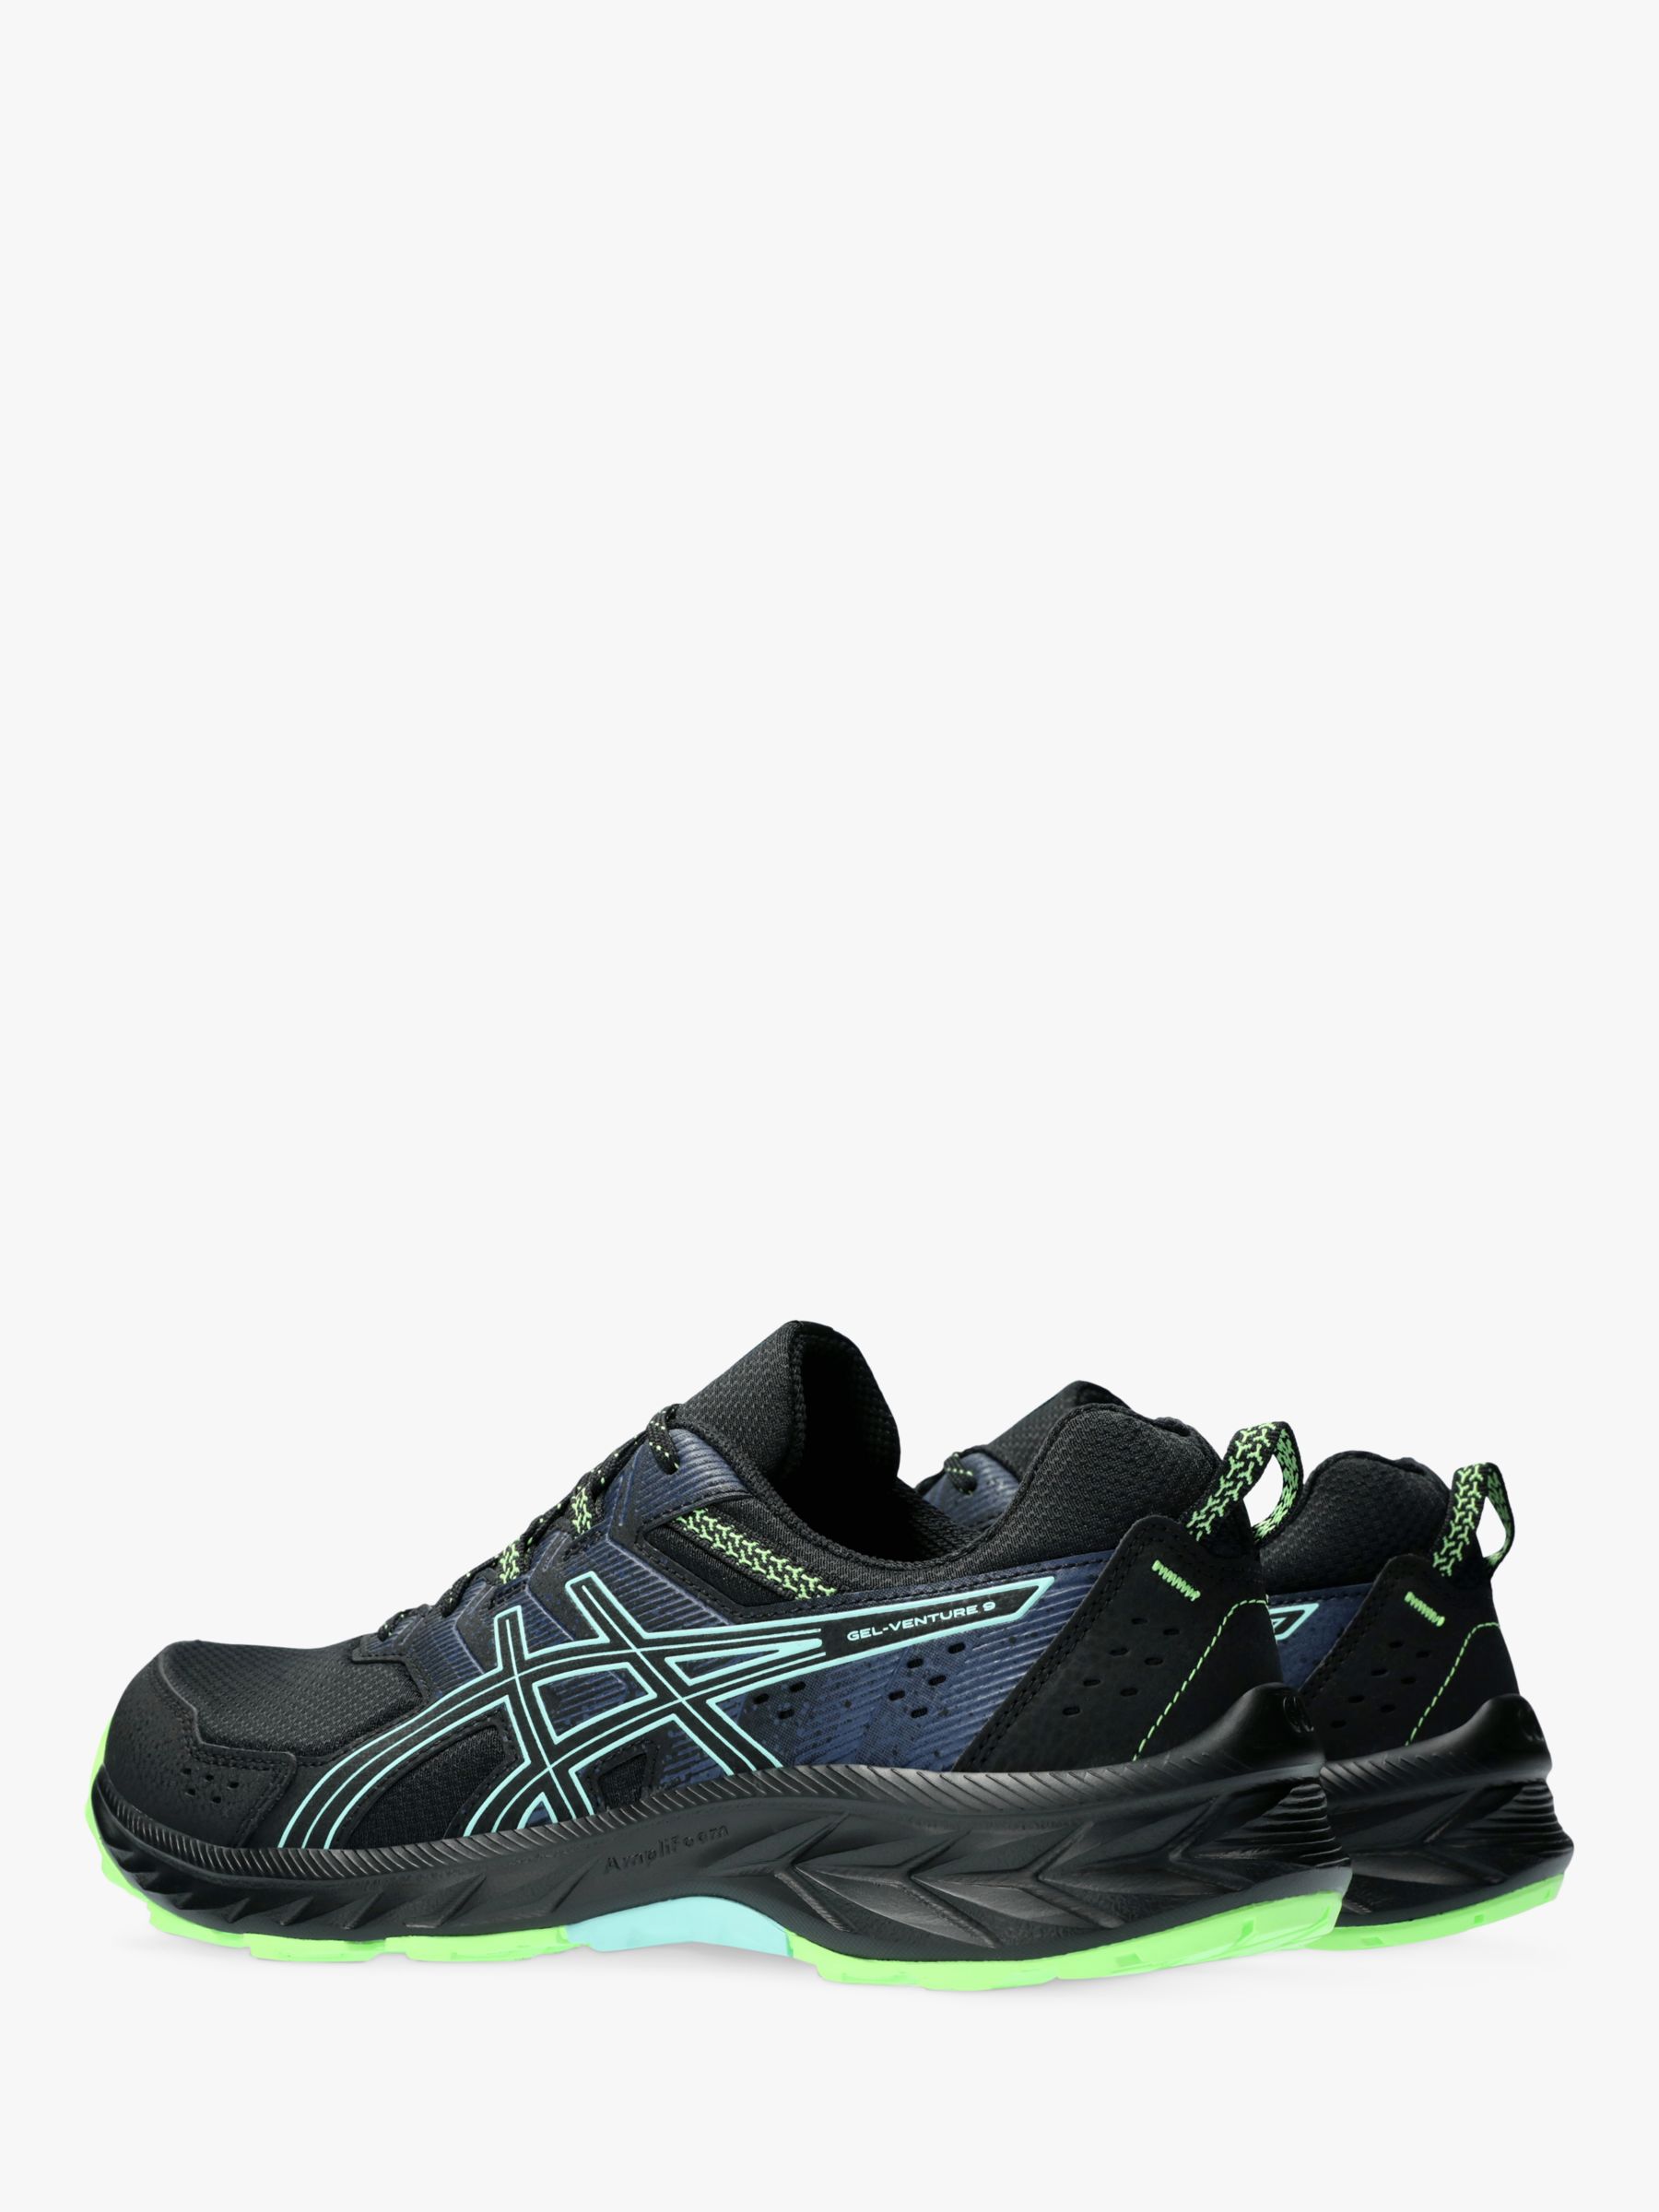 Buy ASICS GEL-VENTURE 9 Men's Running Shoes, Black/Mint Online at johnlewis.com